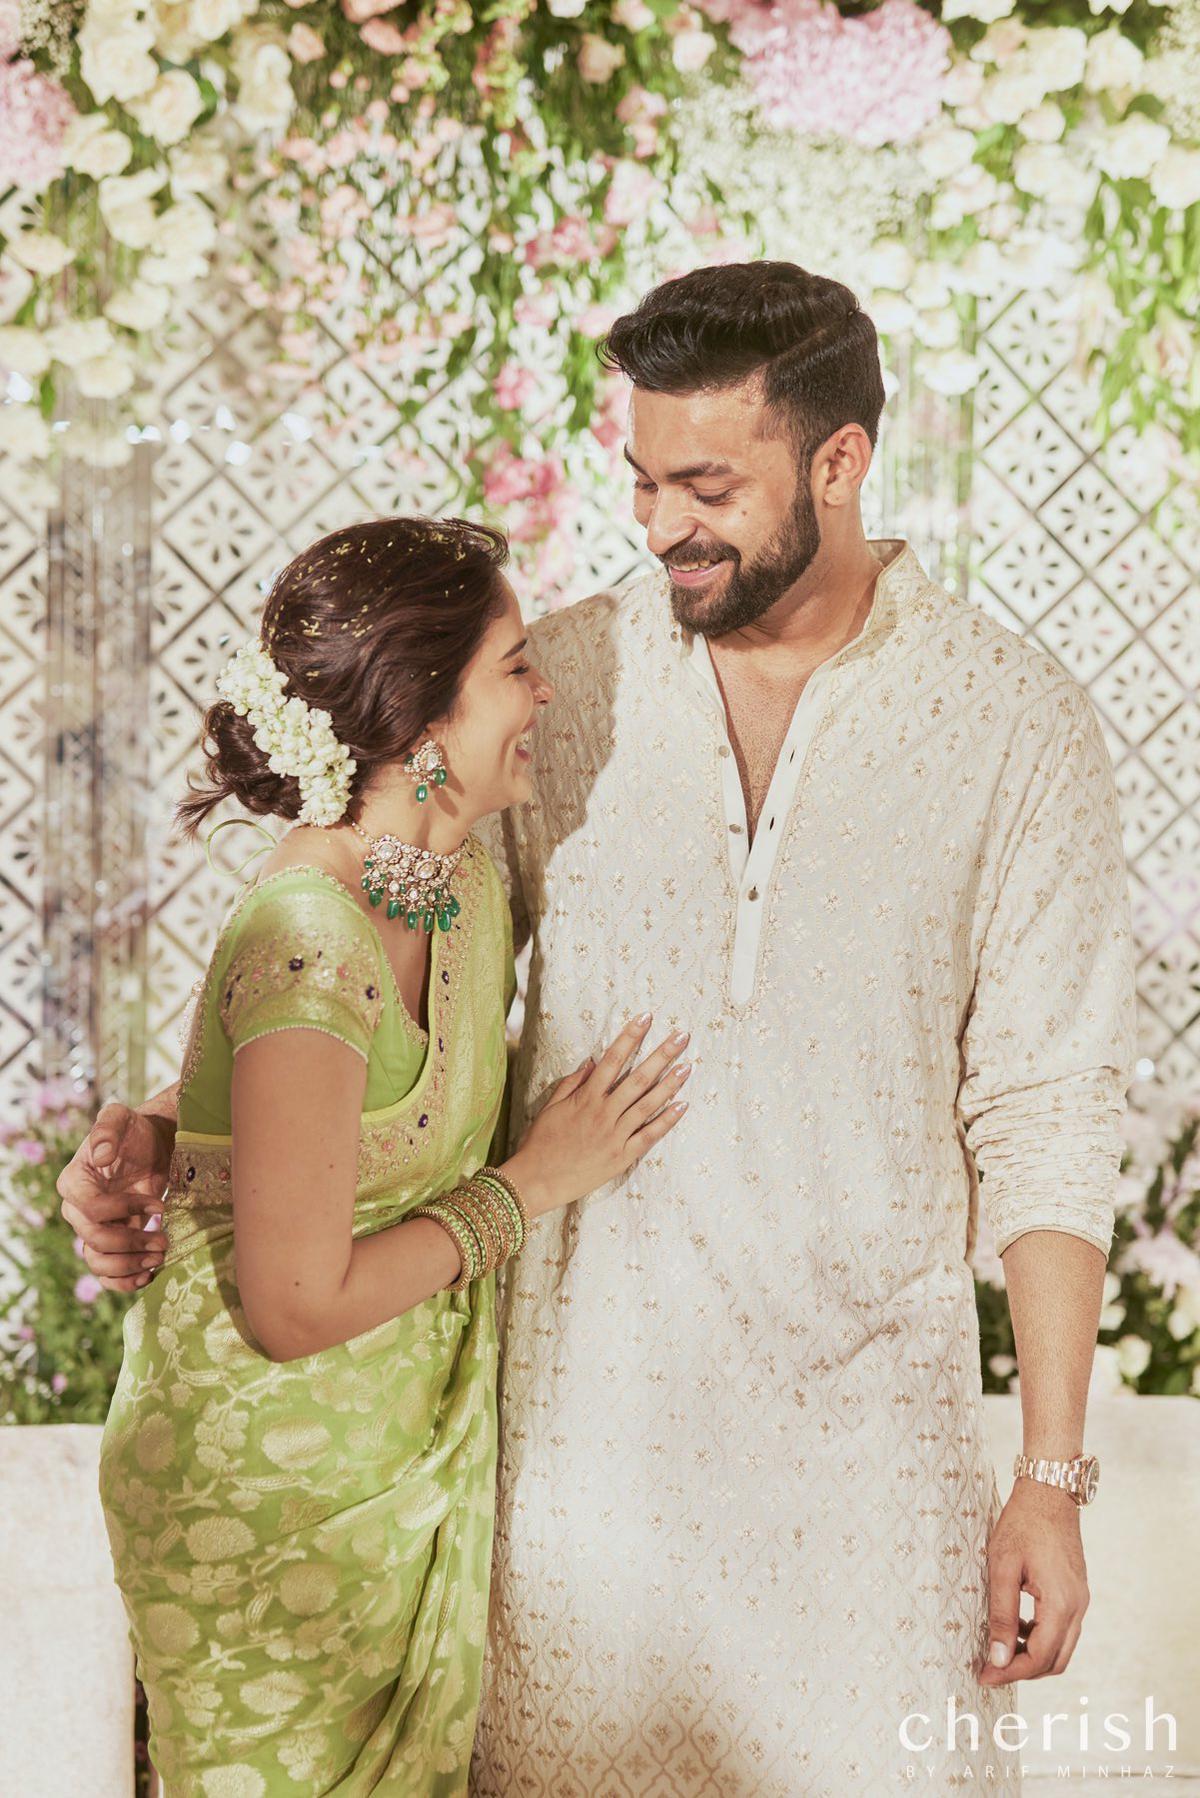 Lavanya Tripathi and Varun Tej at their engagement